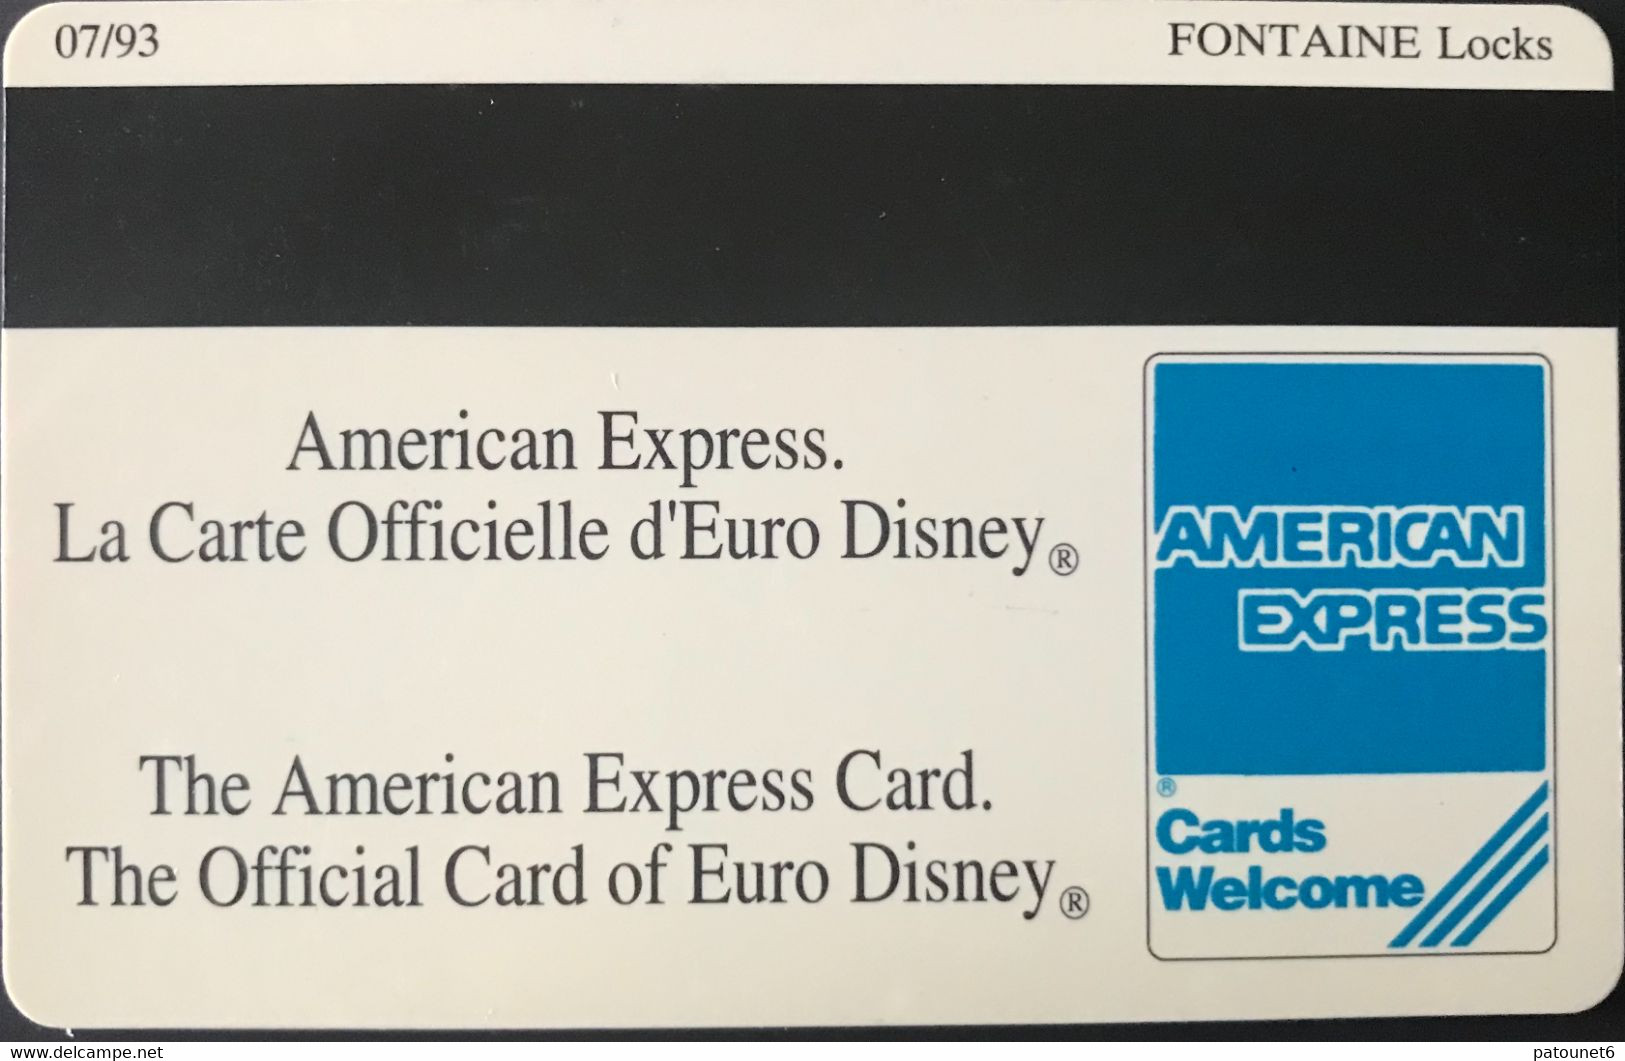 FRANCE  -  Euro Disney  - RESORT HOTELS  -  SEQUOIA LODGE  -  07/93 - Disney Passports